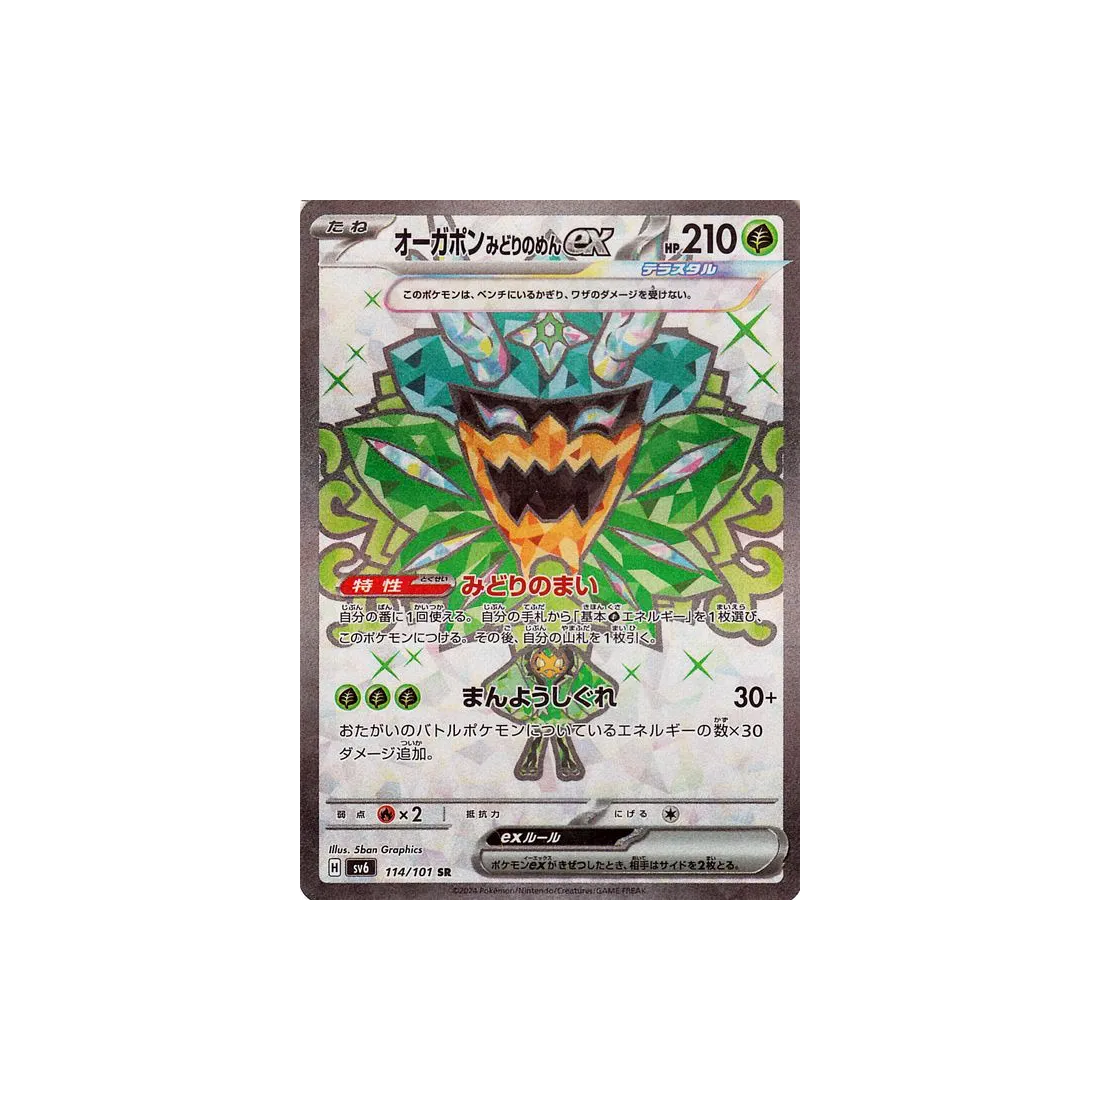 ogerpon-masque-turquoise-carte-pokemon-mask-of-change-sv6-114